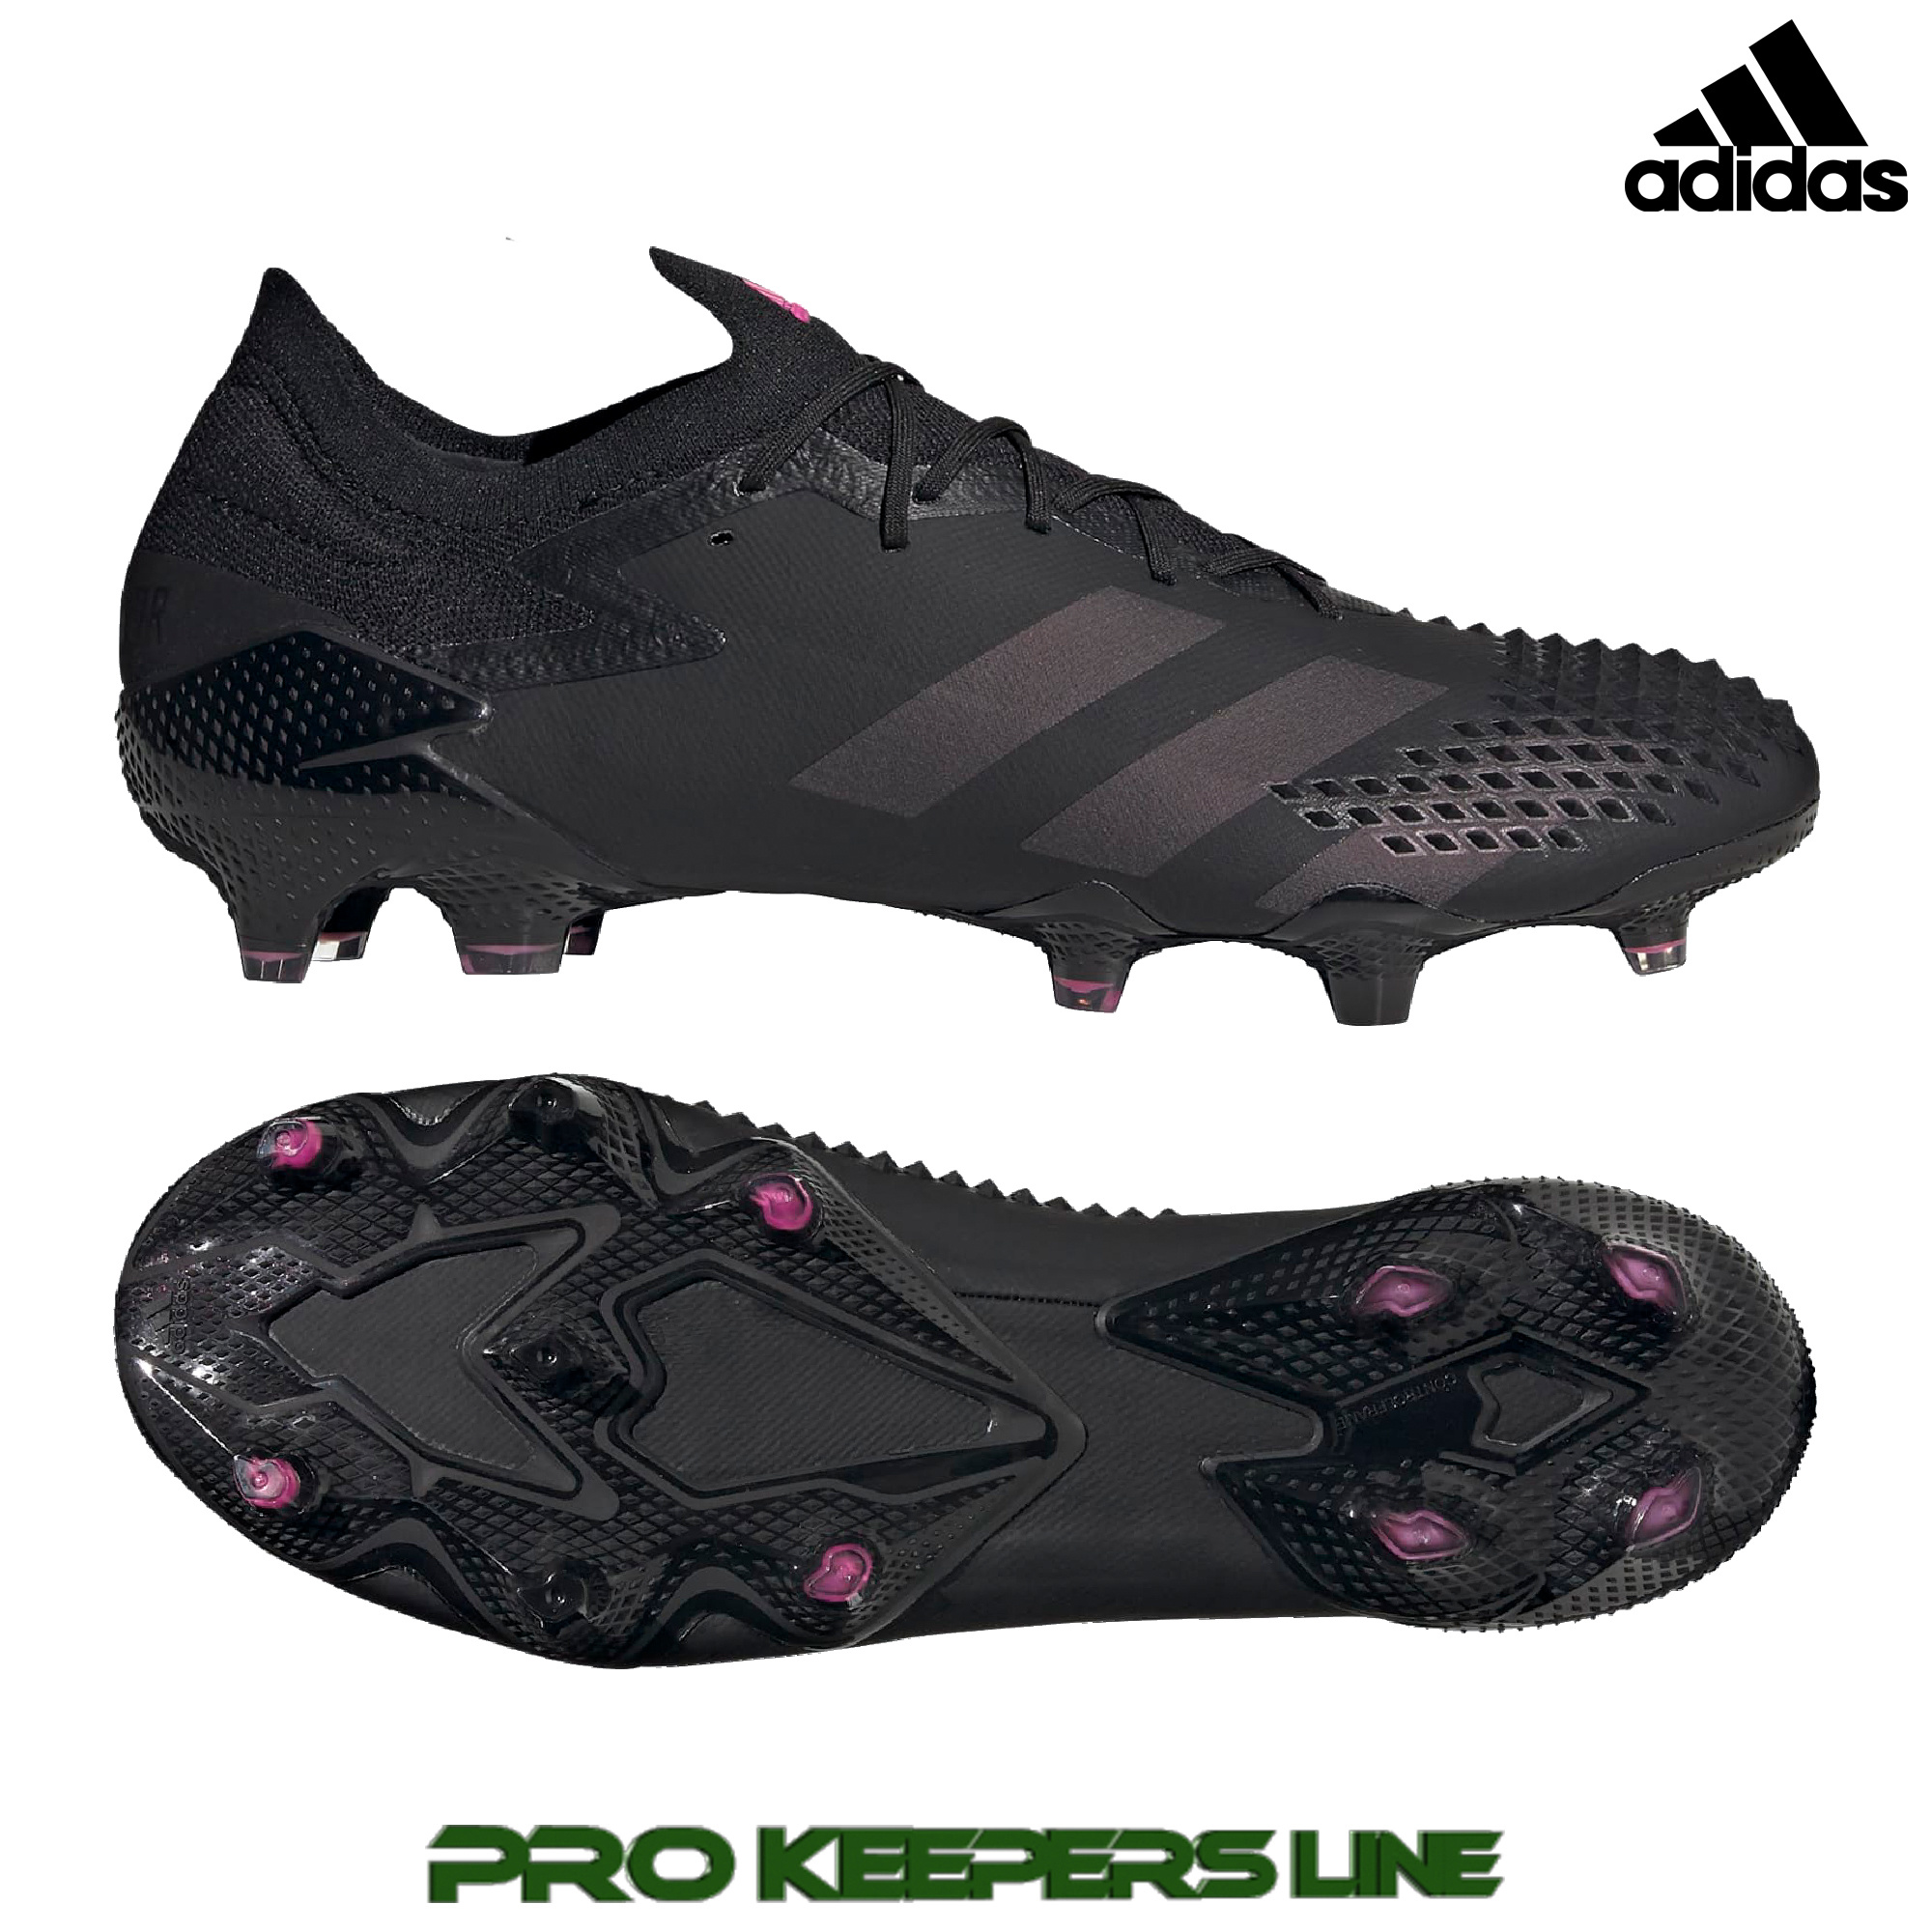 Adidas Predator Mania eBay football boots